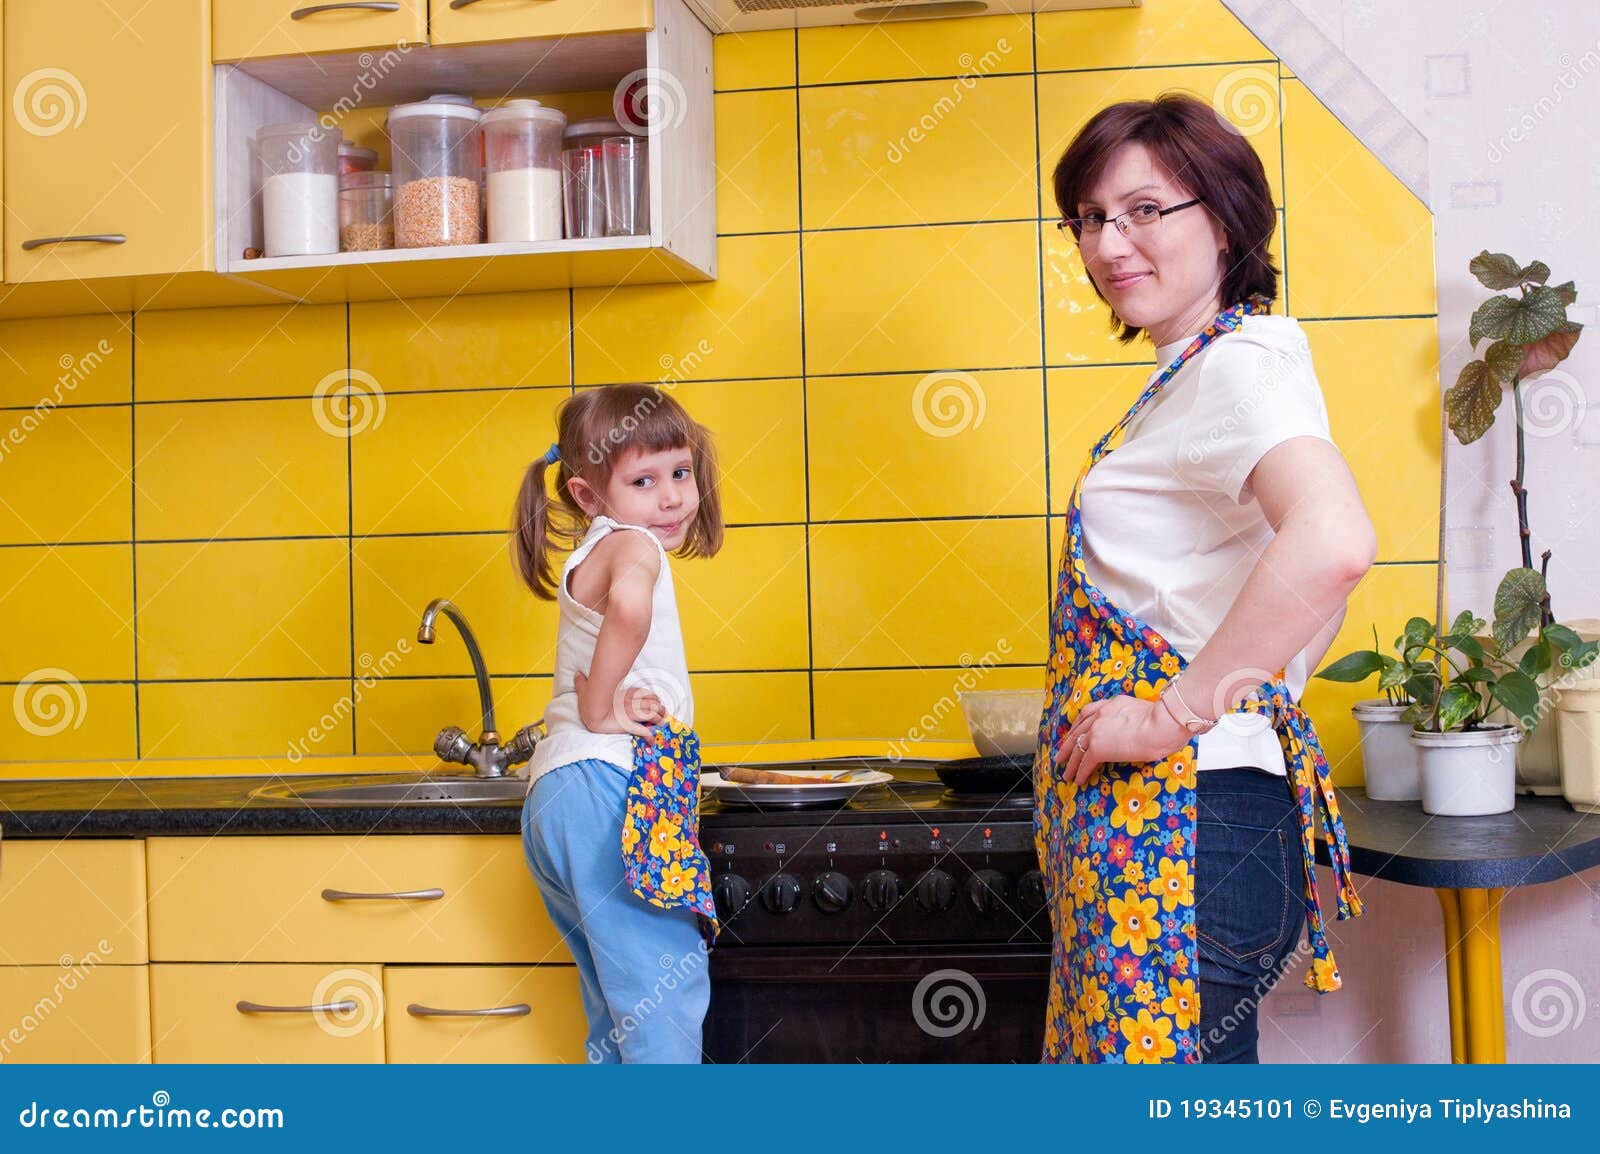 Приходит сын на кухню. Мама на кухне. Фотосессия мама и дочка на кухне. Японская мамаша на кухне. Русская мама на кухне сын.